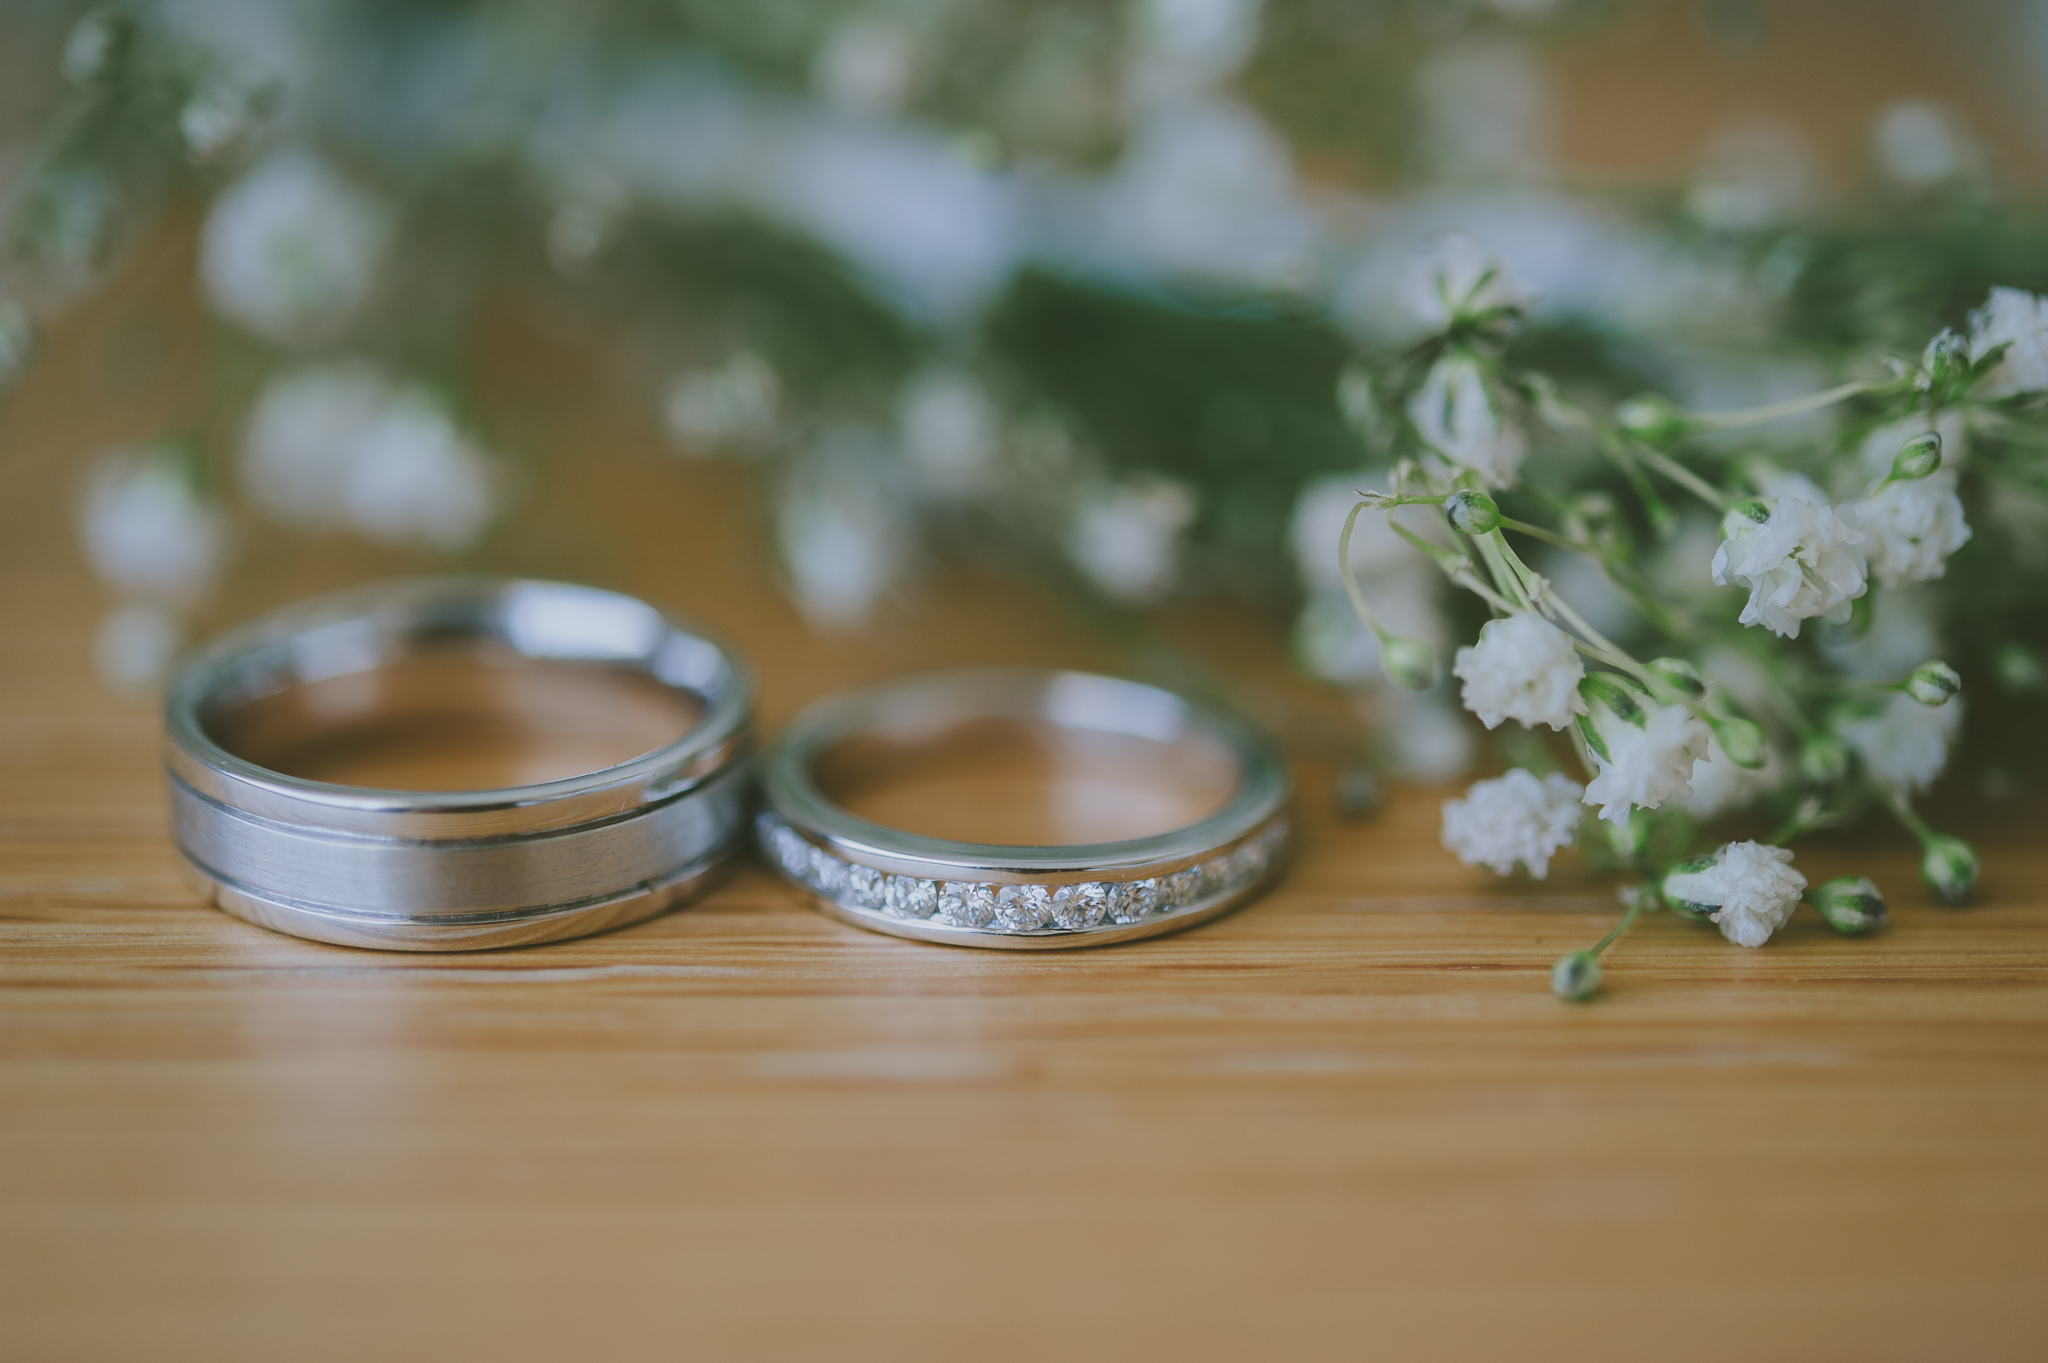 Wedding rings